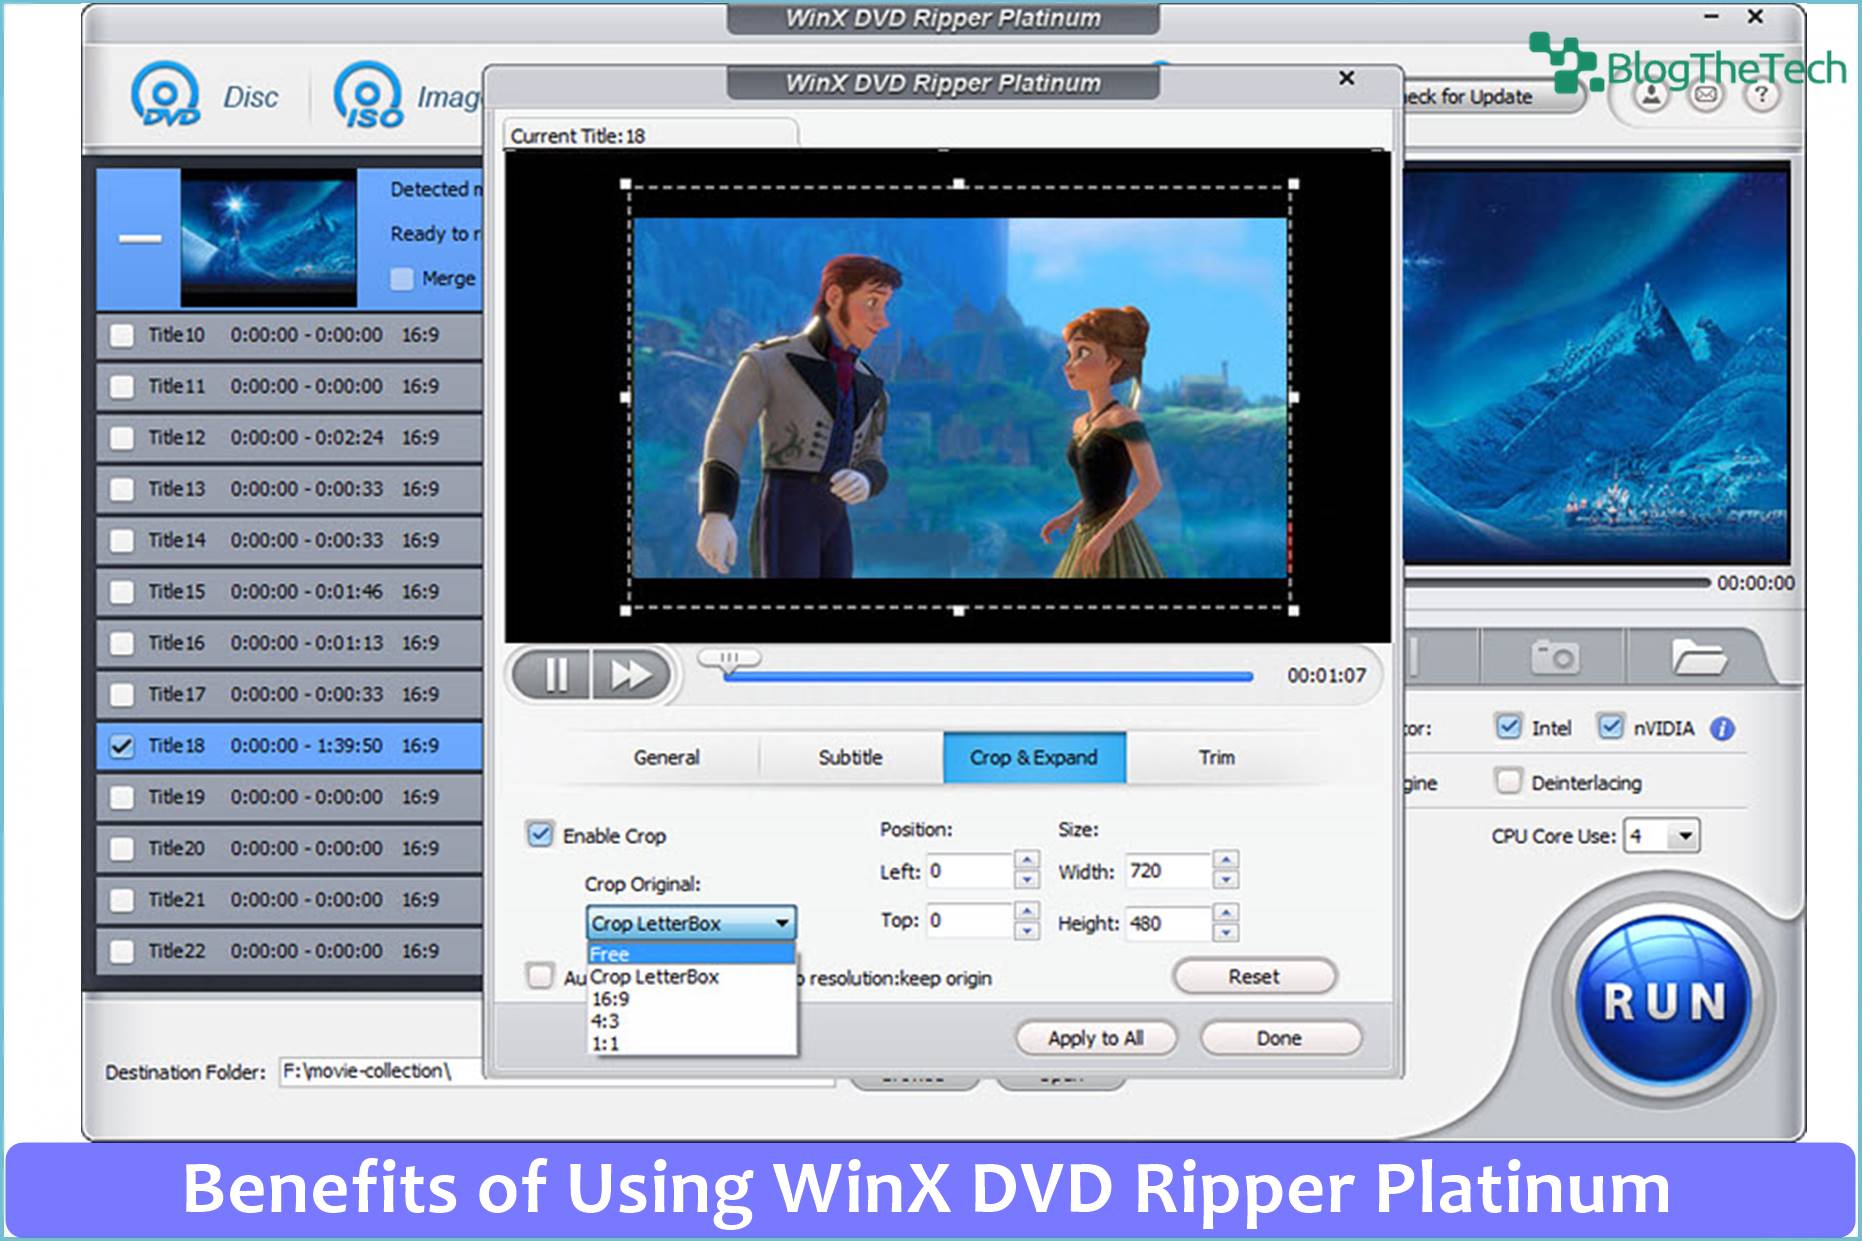 Benefits of Using WinX DVD Ripper Platinum